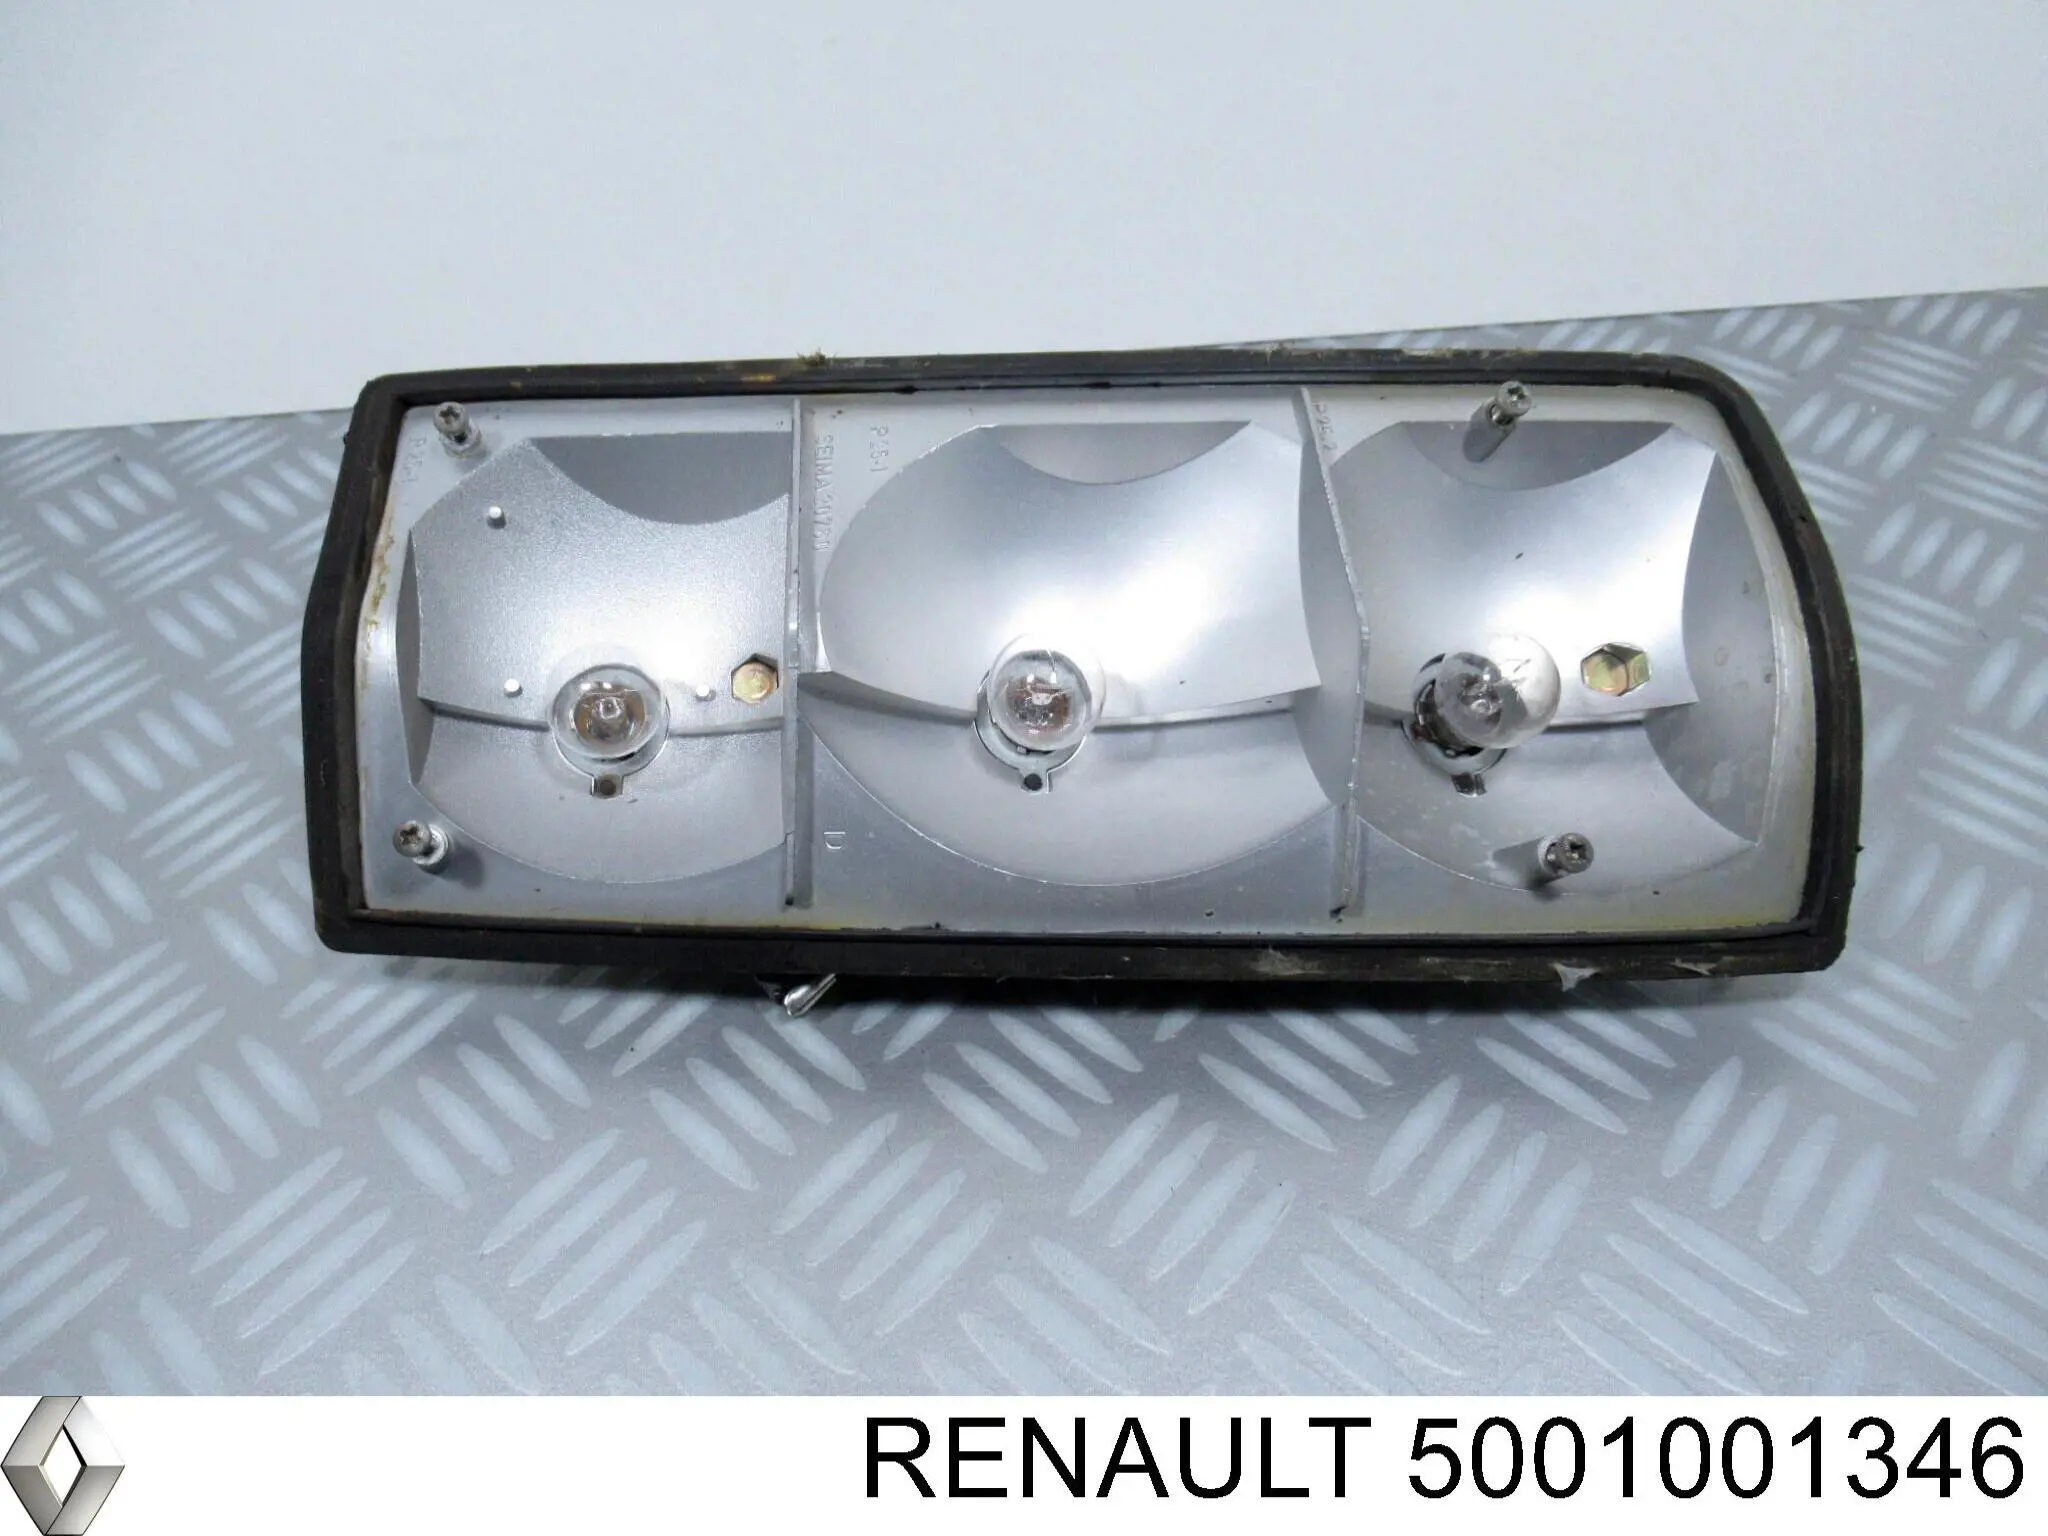 5001001346 Renault (RVI) lanterna traseira esquerda